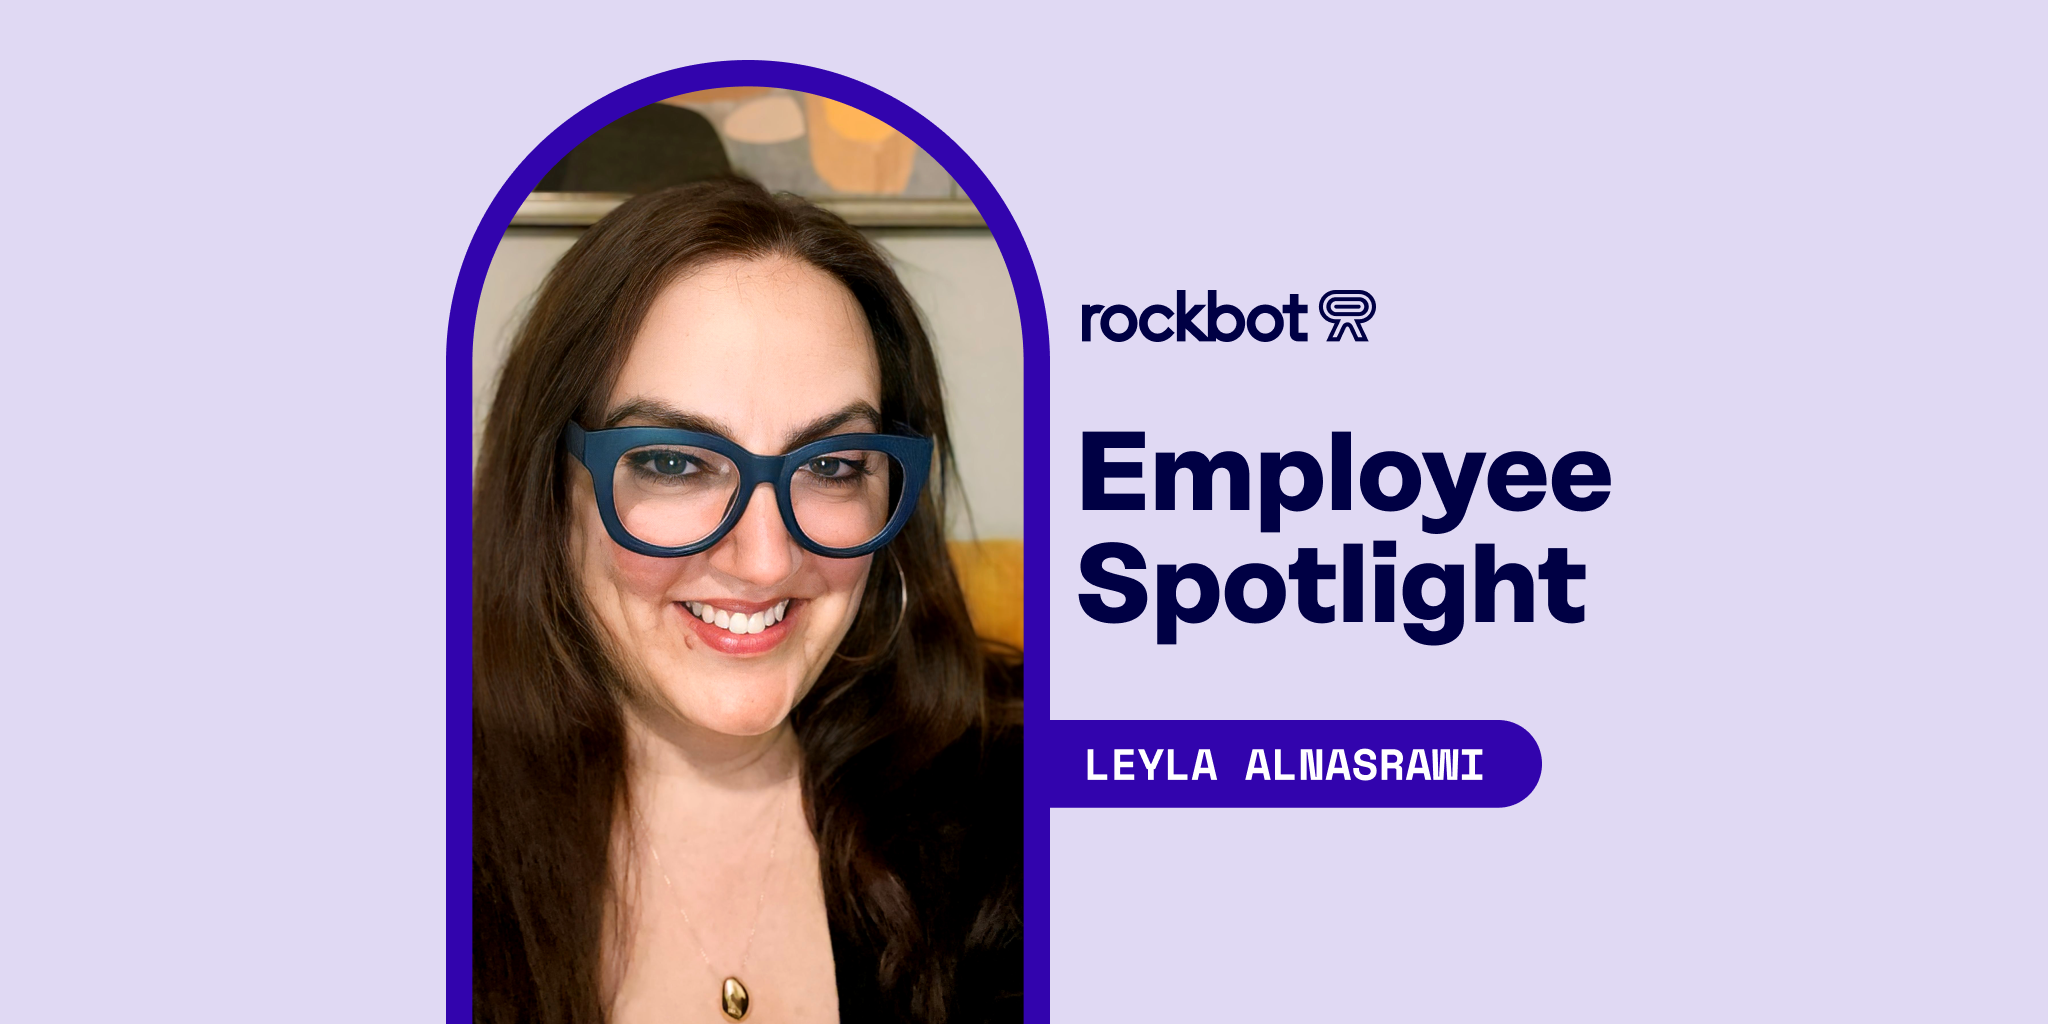 Leyla Alnasrawi, Director, Customer Support at Rockbot